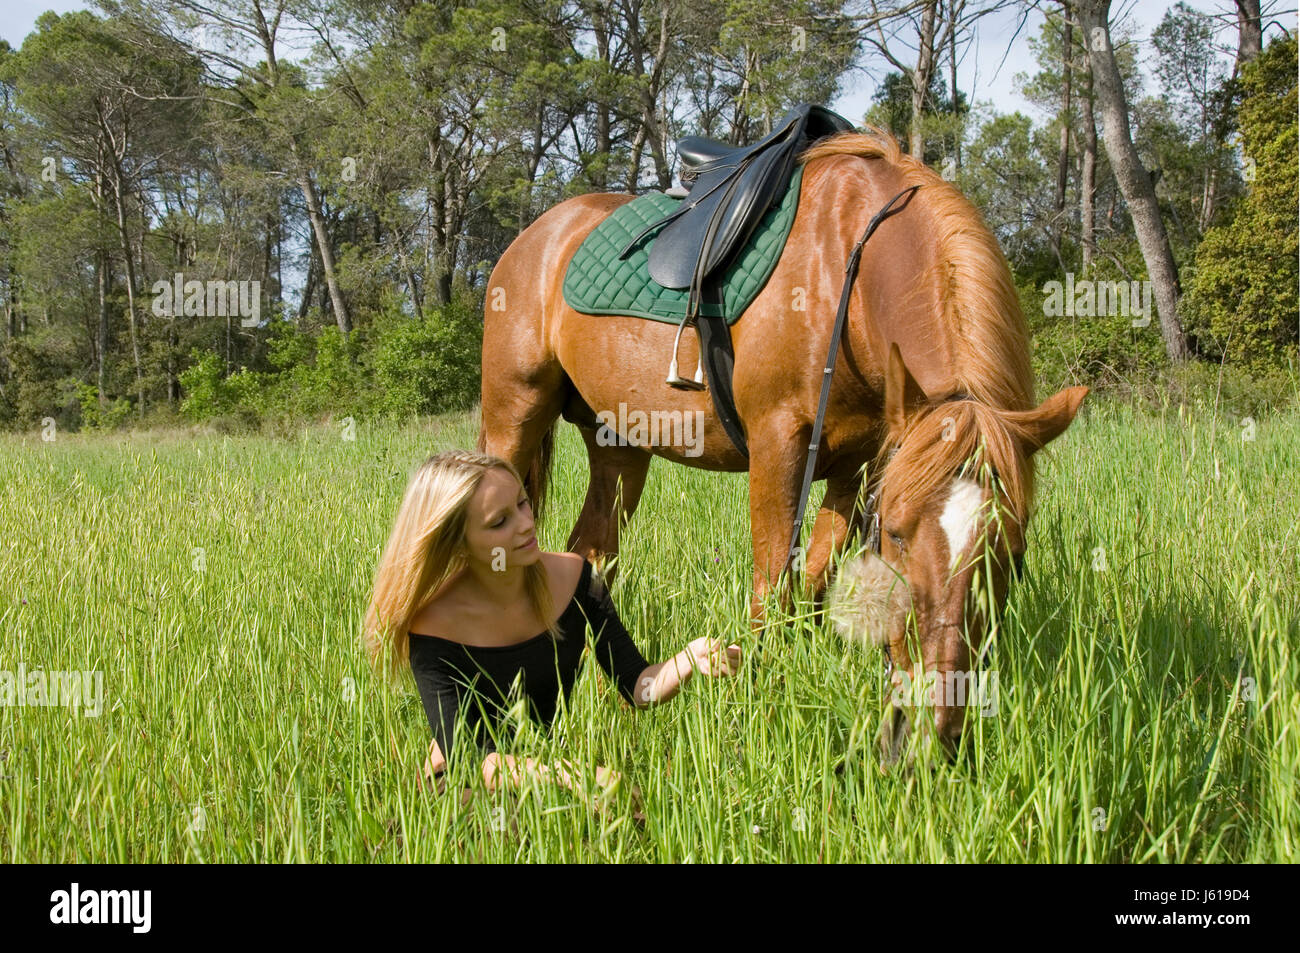 woman horse field stallion teenager blond beauty friendship animal pet brown Stock Photo